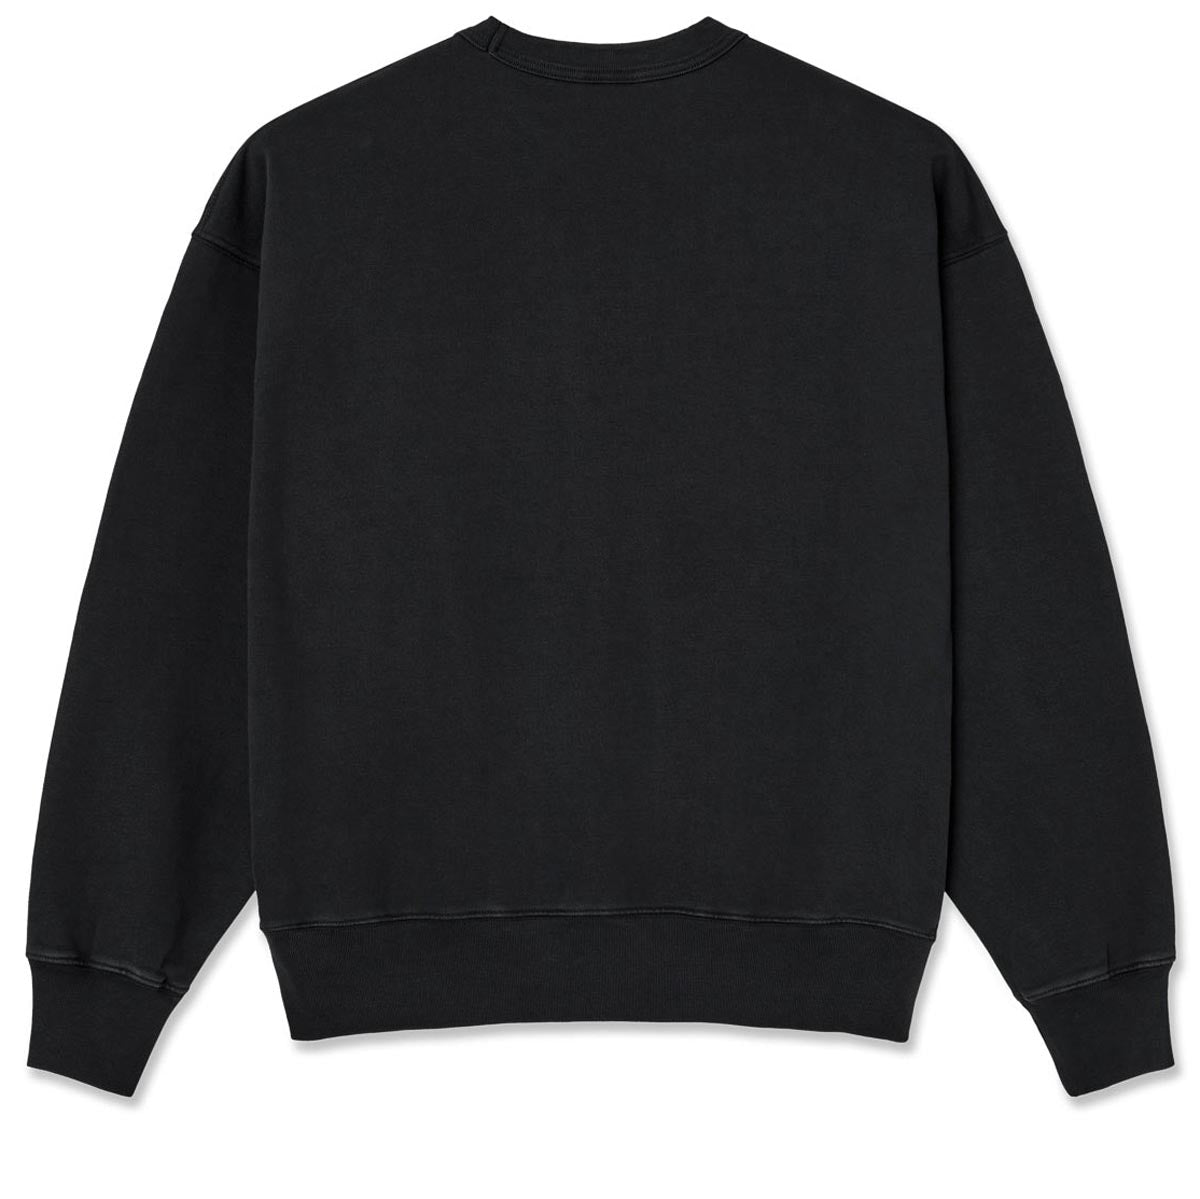 Last Resort AB LR Signature Sweater - Washed Black image 3